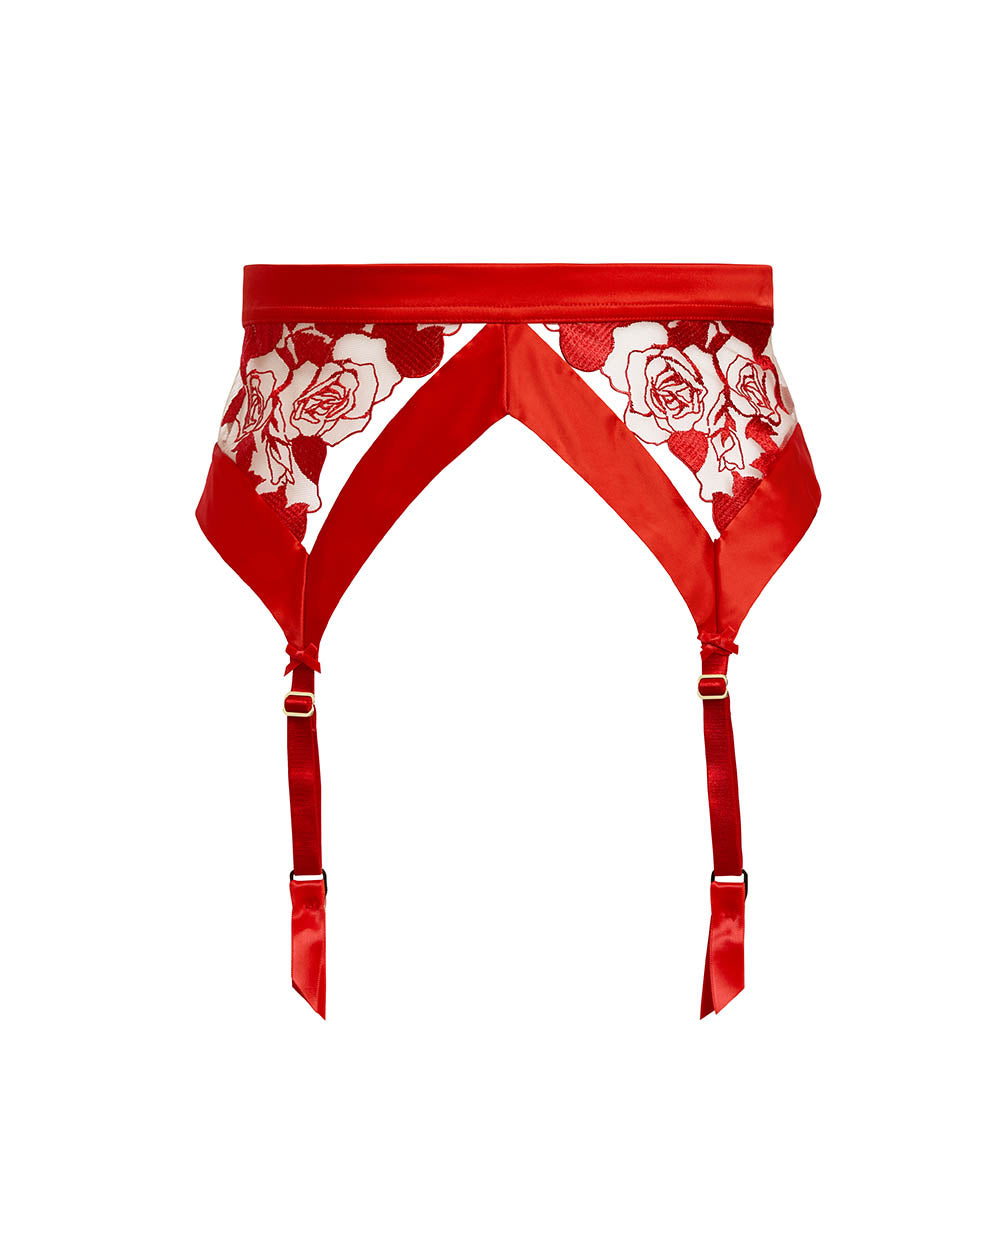 NEW! Rosabelle Flame Red Suspender Belt by Dita Von Teese